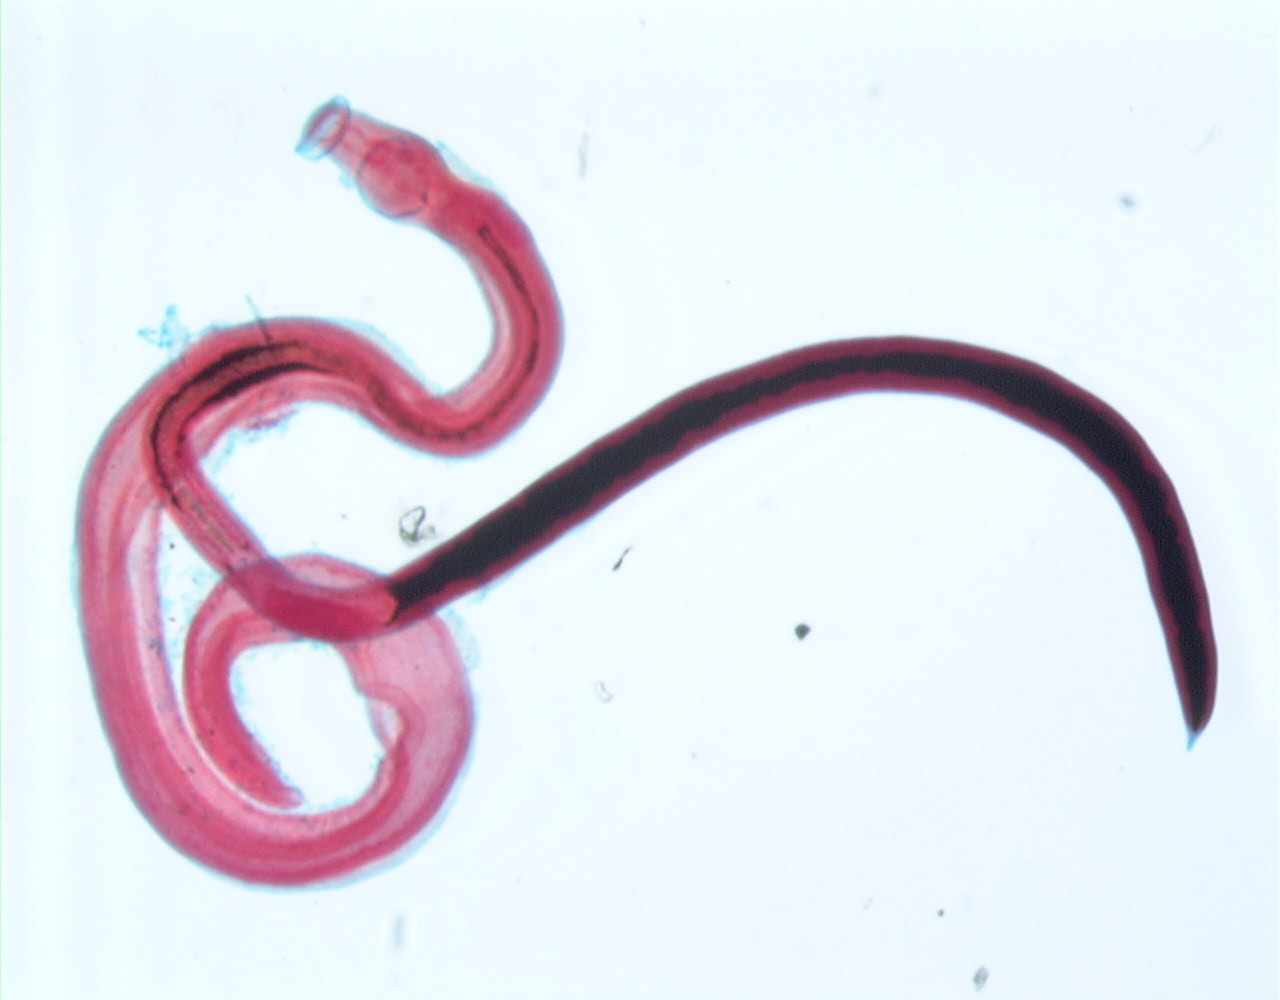 Schistosoma Intercalatum